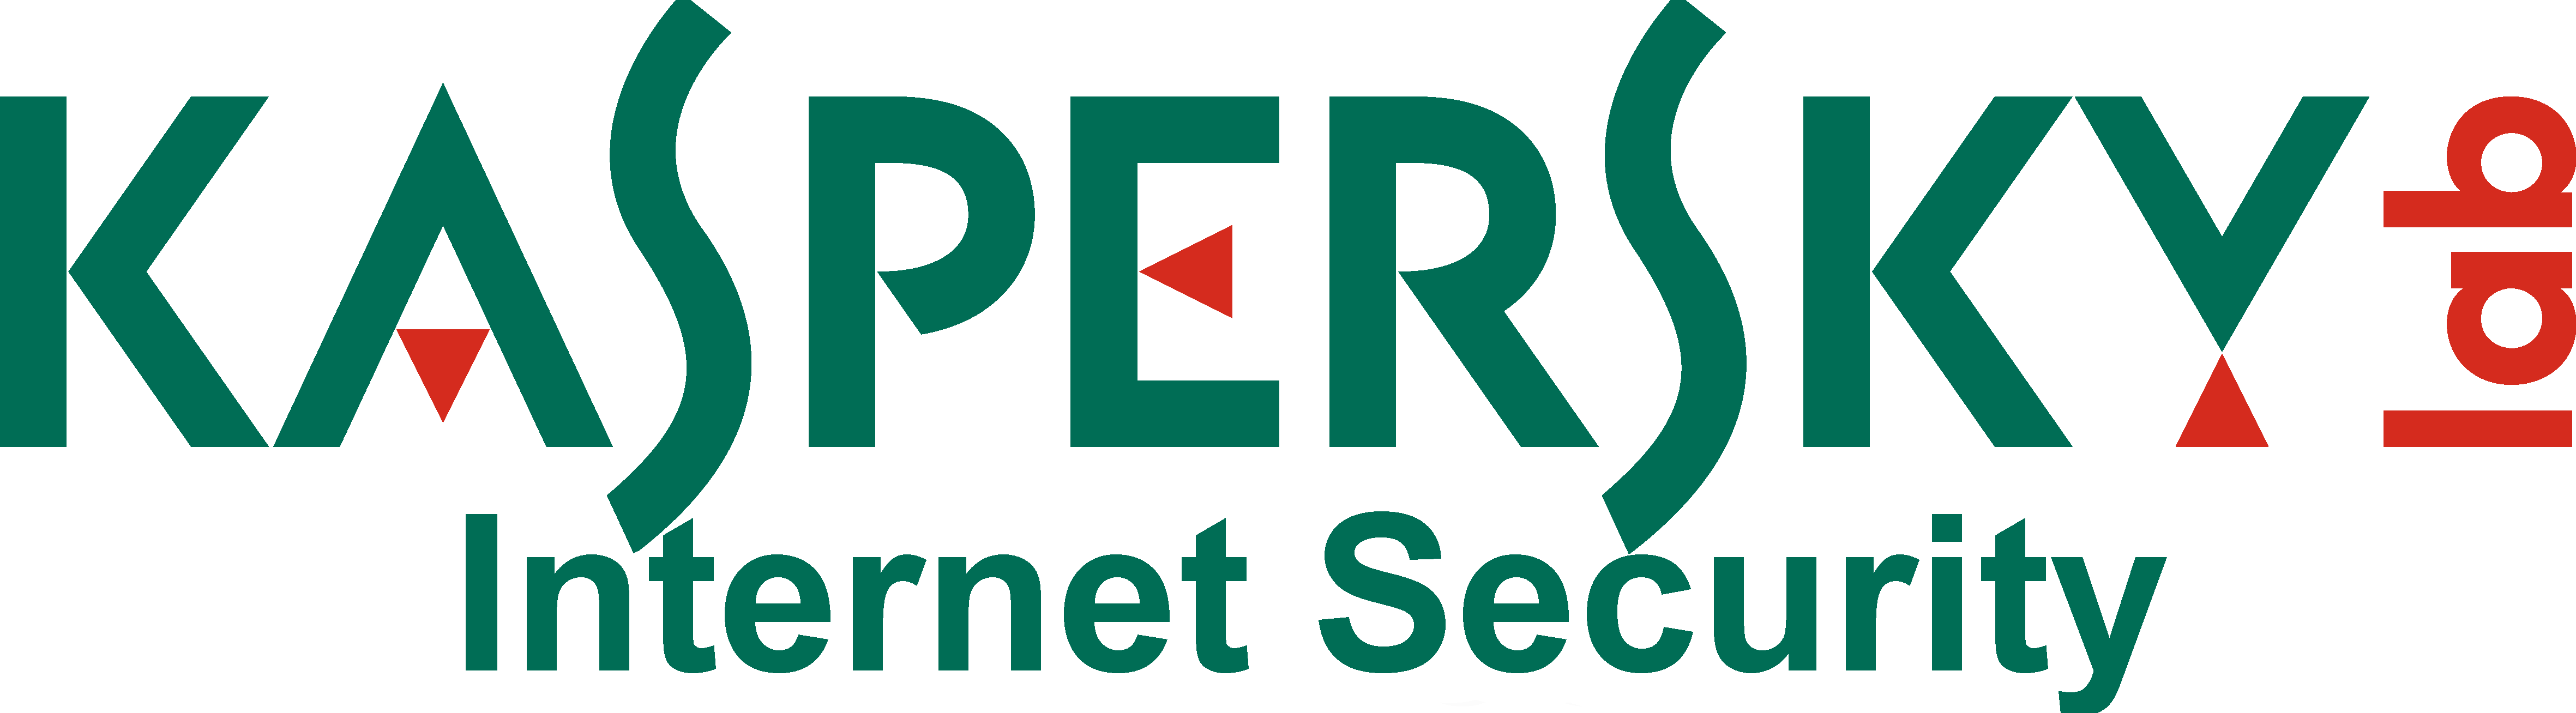 Kaspersky Internet Security 2019 Internet